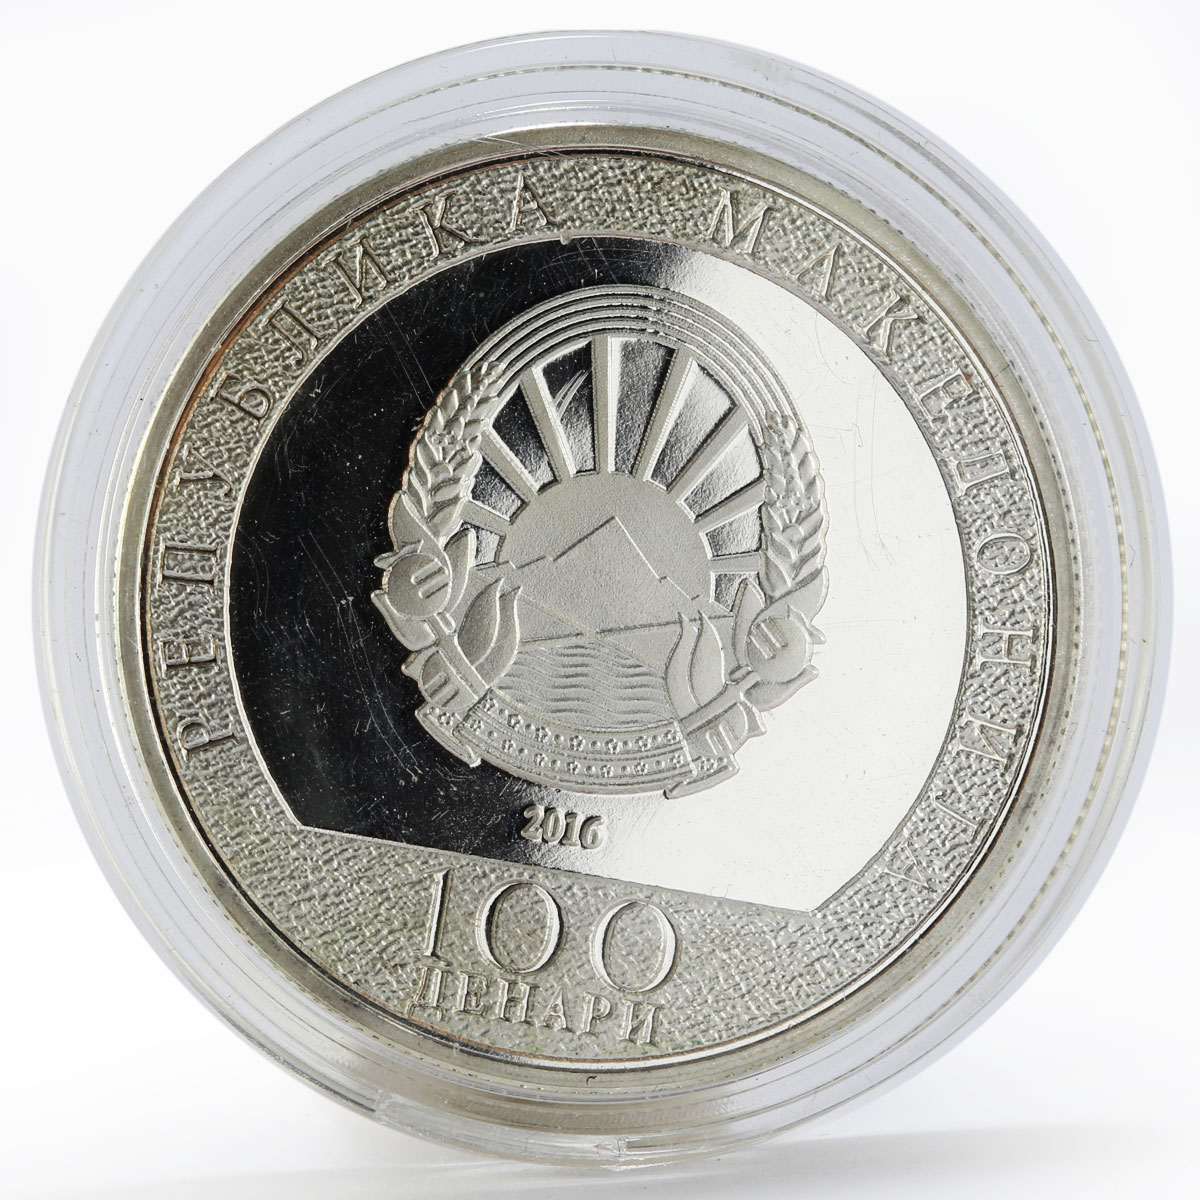 Macedonia 100 denari Canonization Mother Teresa colored proof silver coin 2016